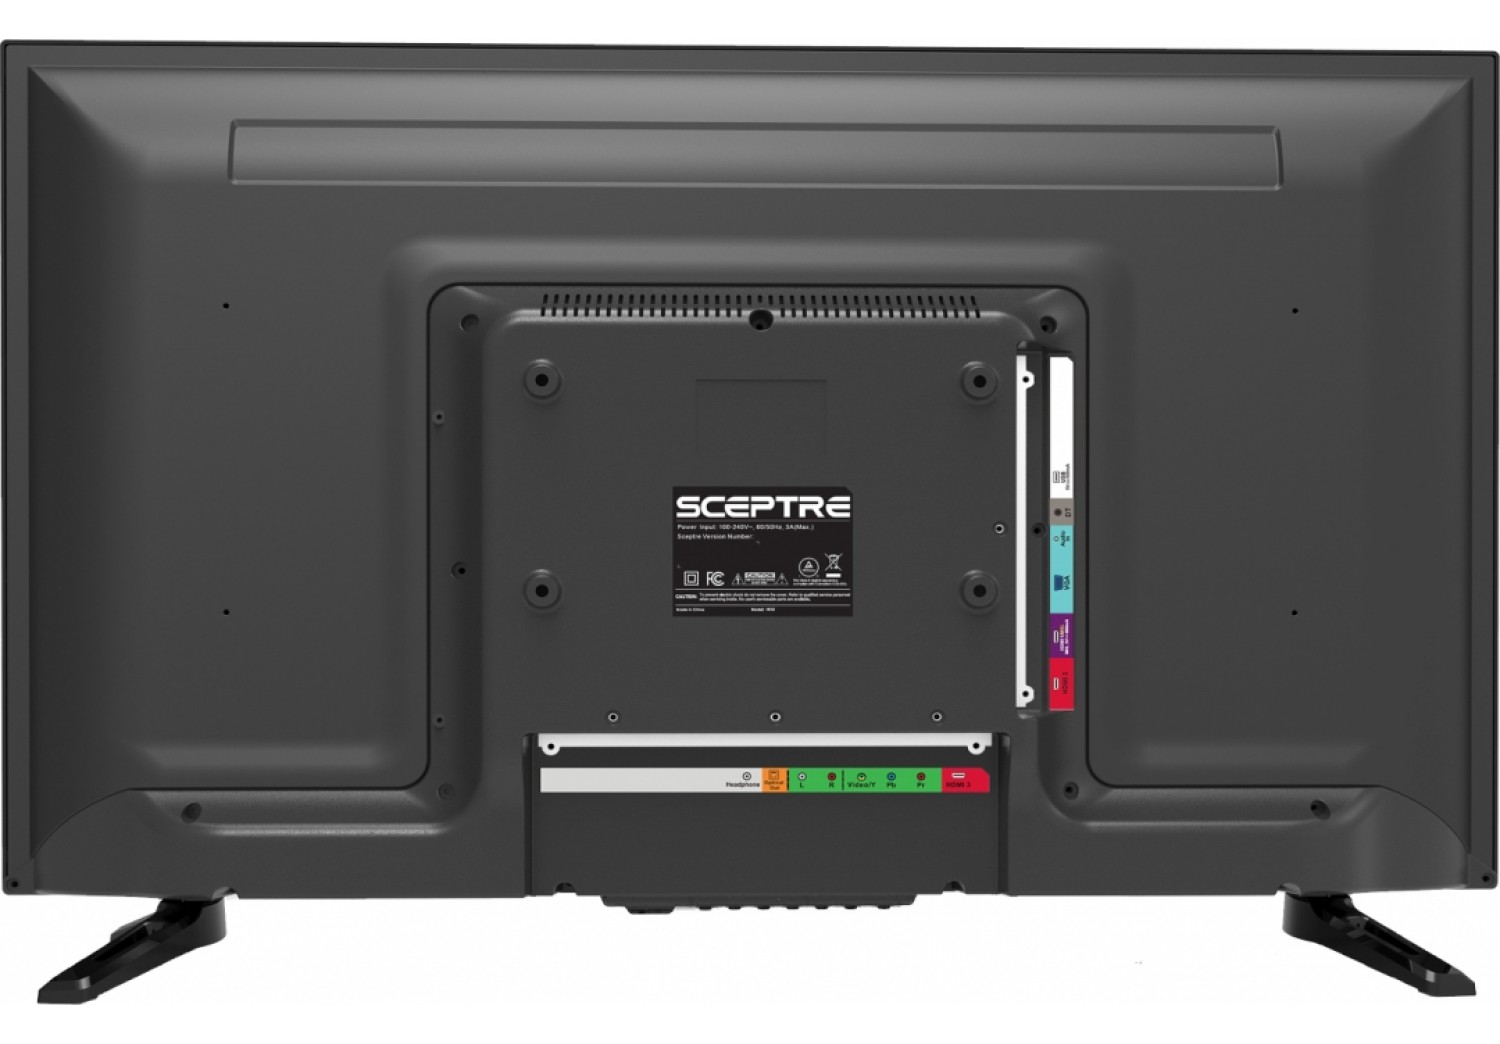 Sceptre 32 inches 1080p LED TV 2018 